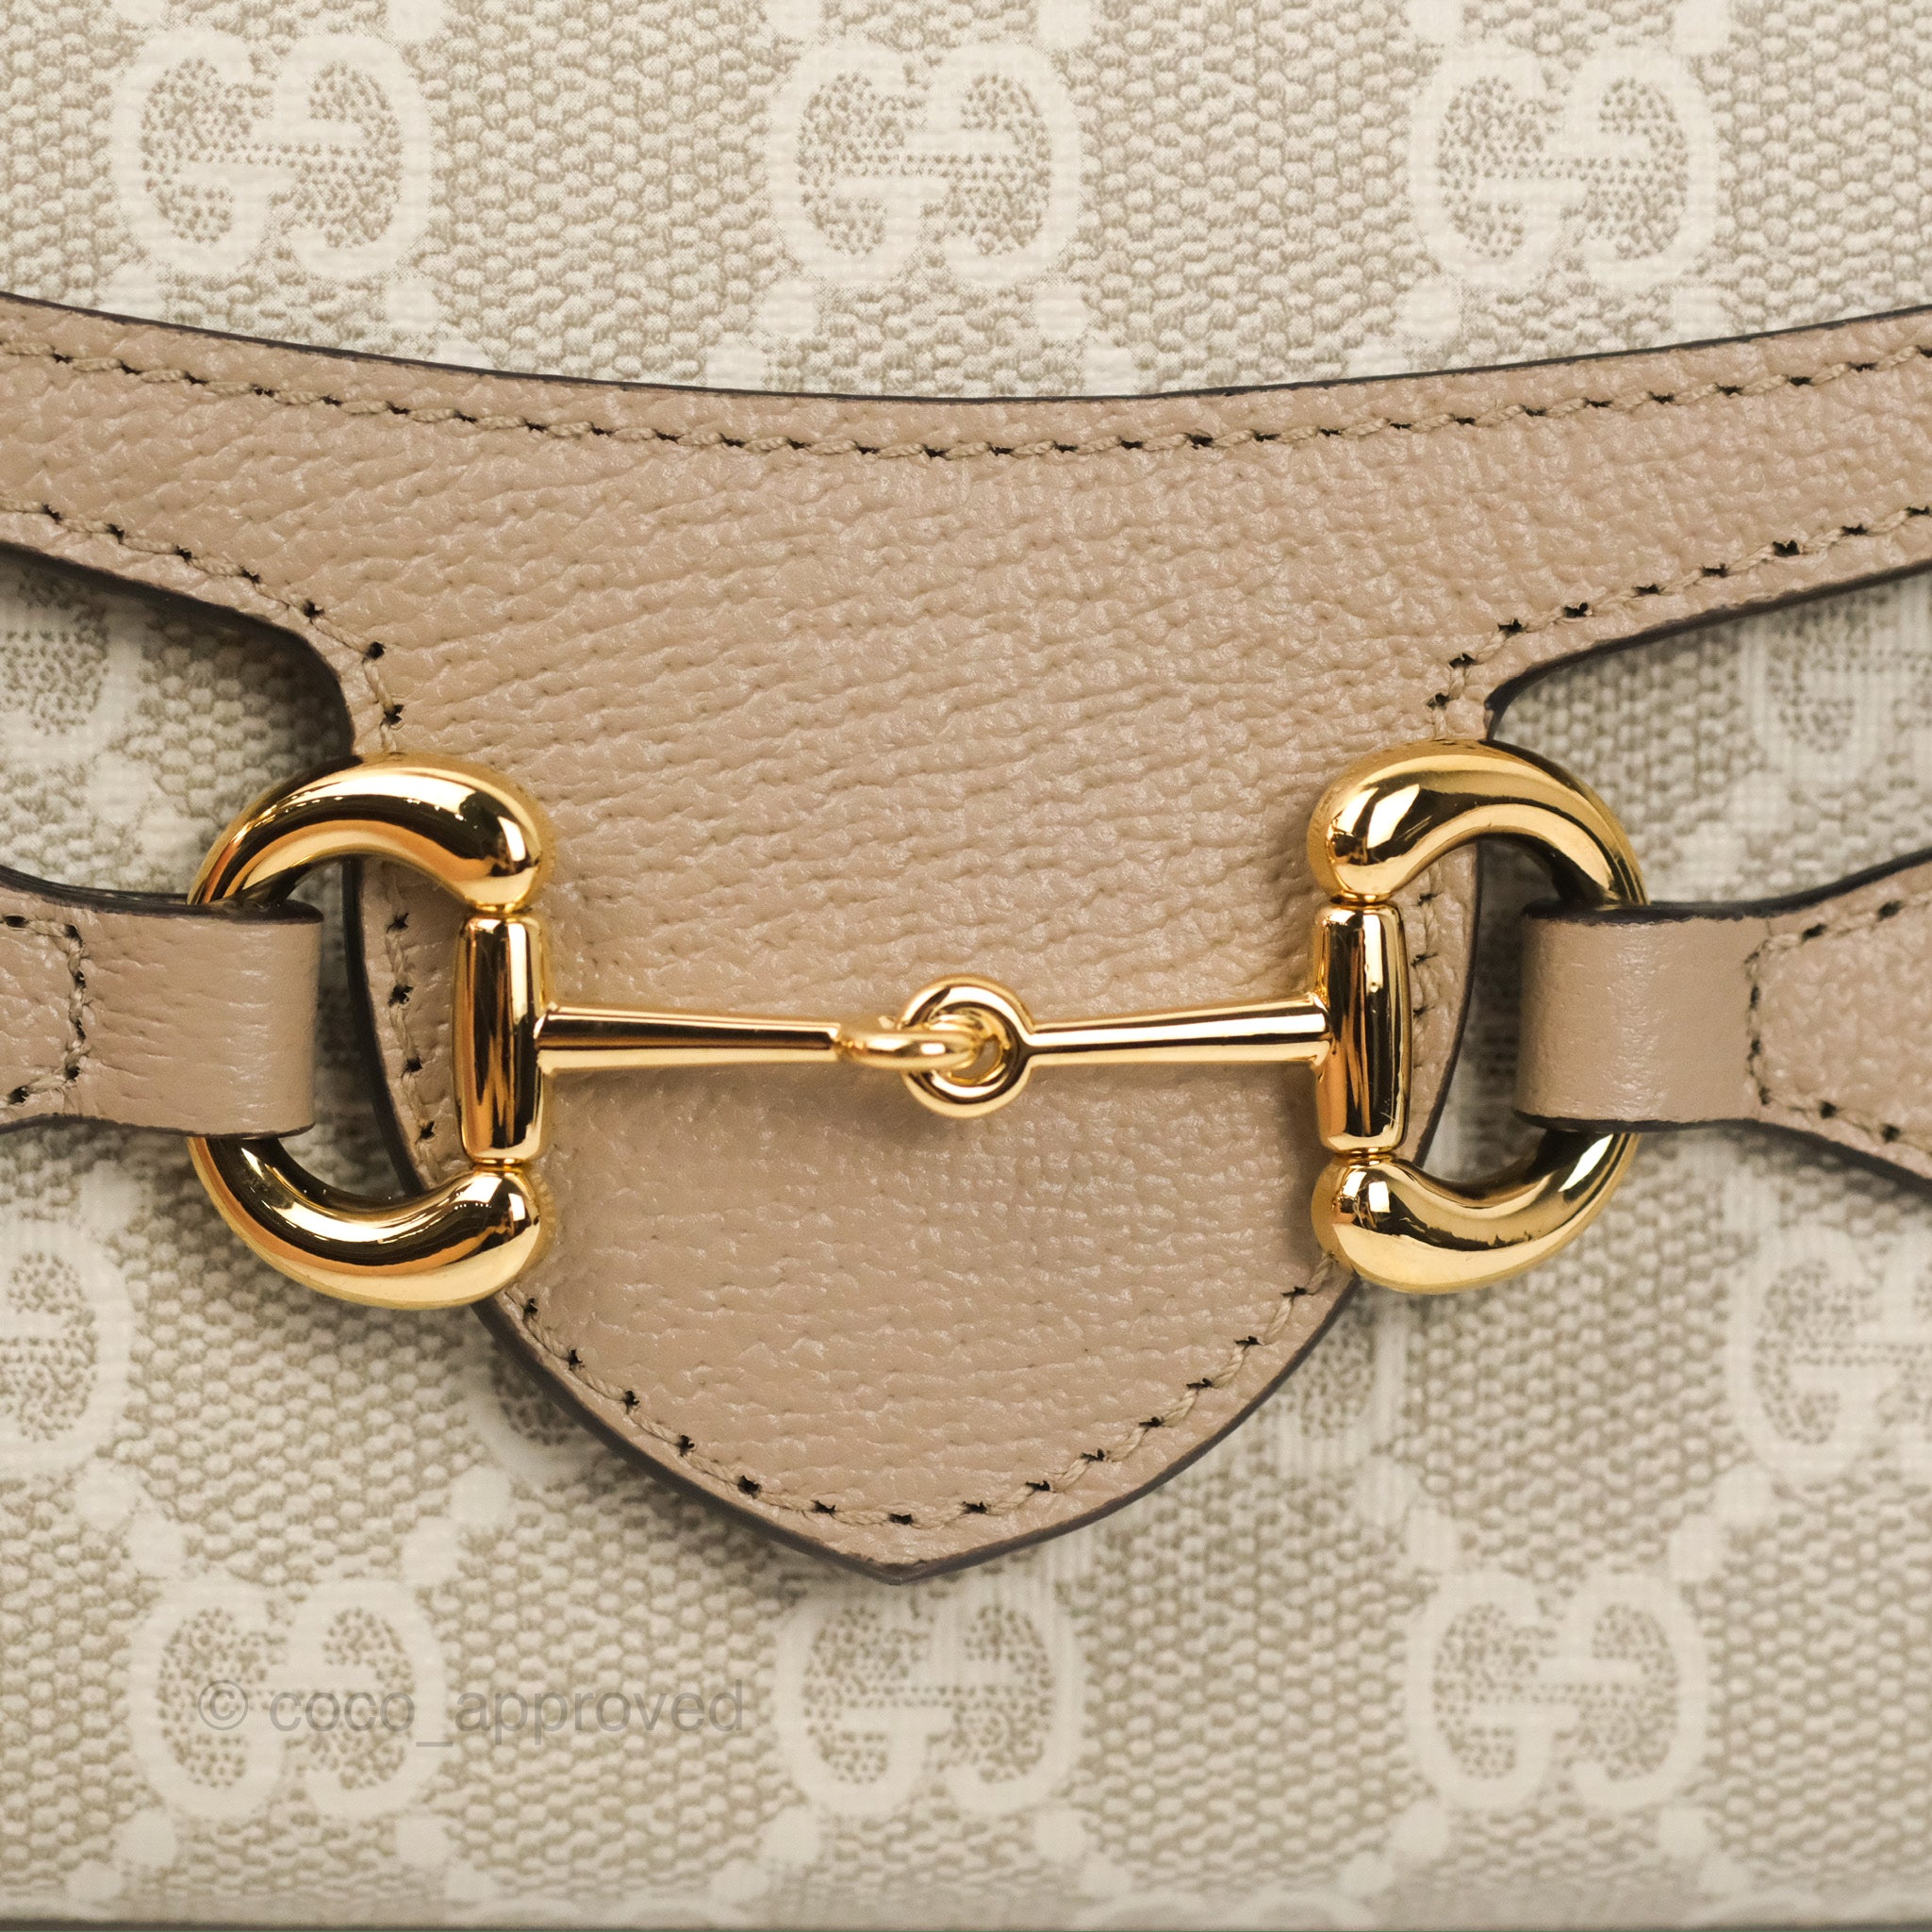 Gucci 1955 Horsebit Mini Bag - Beige